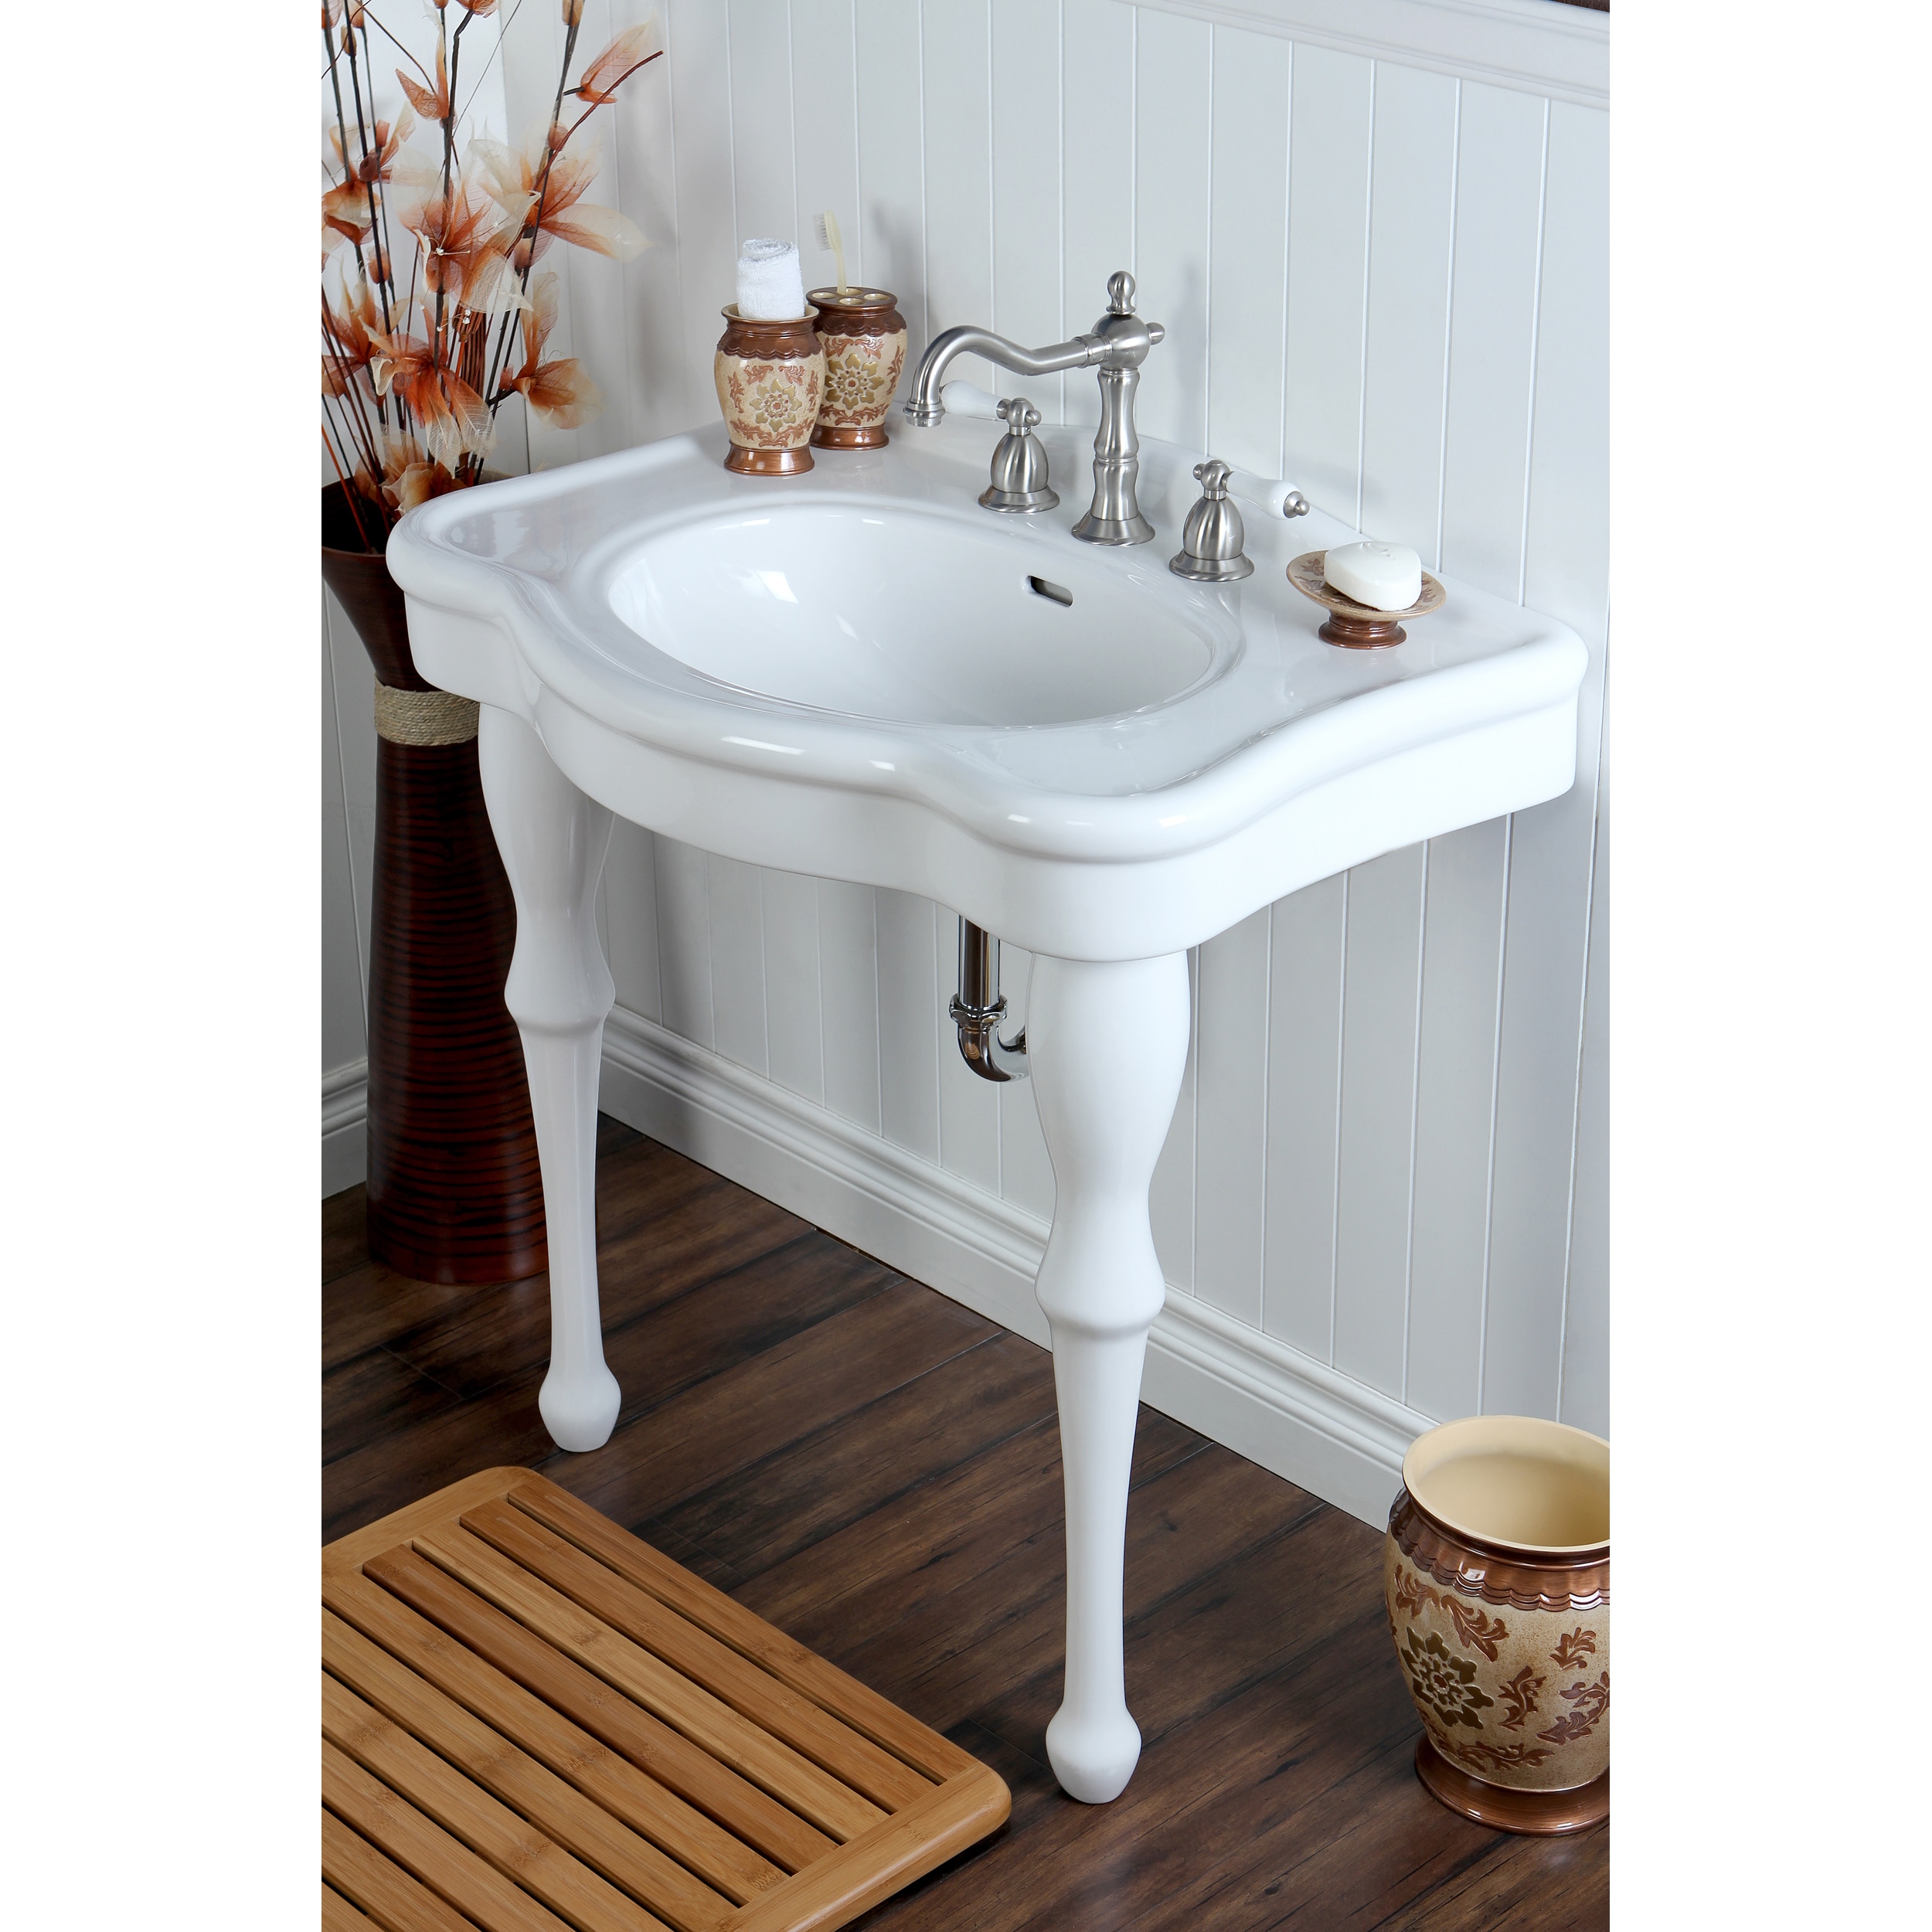 Vintage White China 32 Inch Wall Mount Bathroom Vanity Sink Overstock 8036002